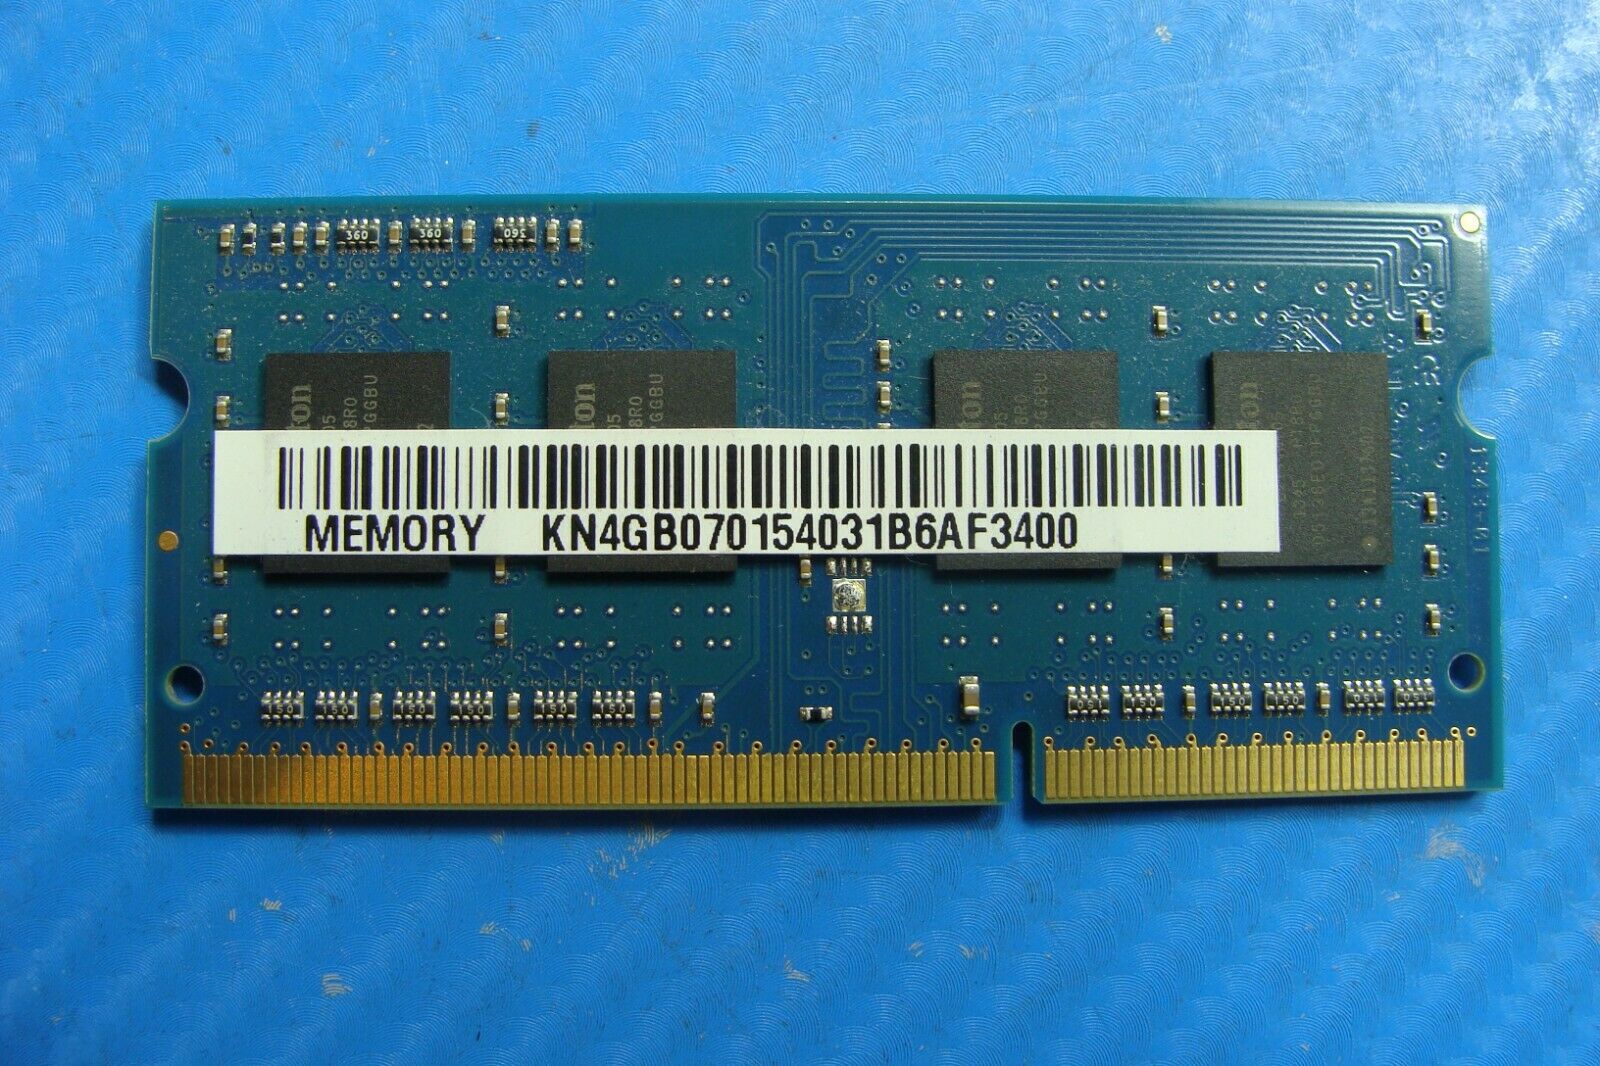 Acer V5-561PG Kingston 4Gb 1Rx8 pc3l-12800s Memory RAM SO-DIMM acr16d3ls1kfg/4g 